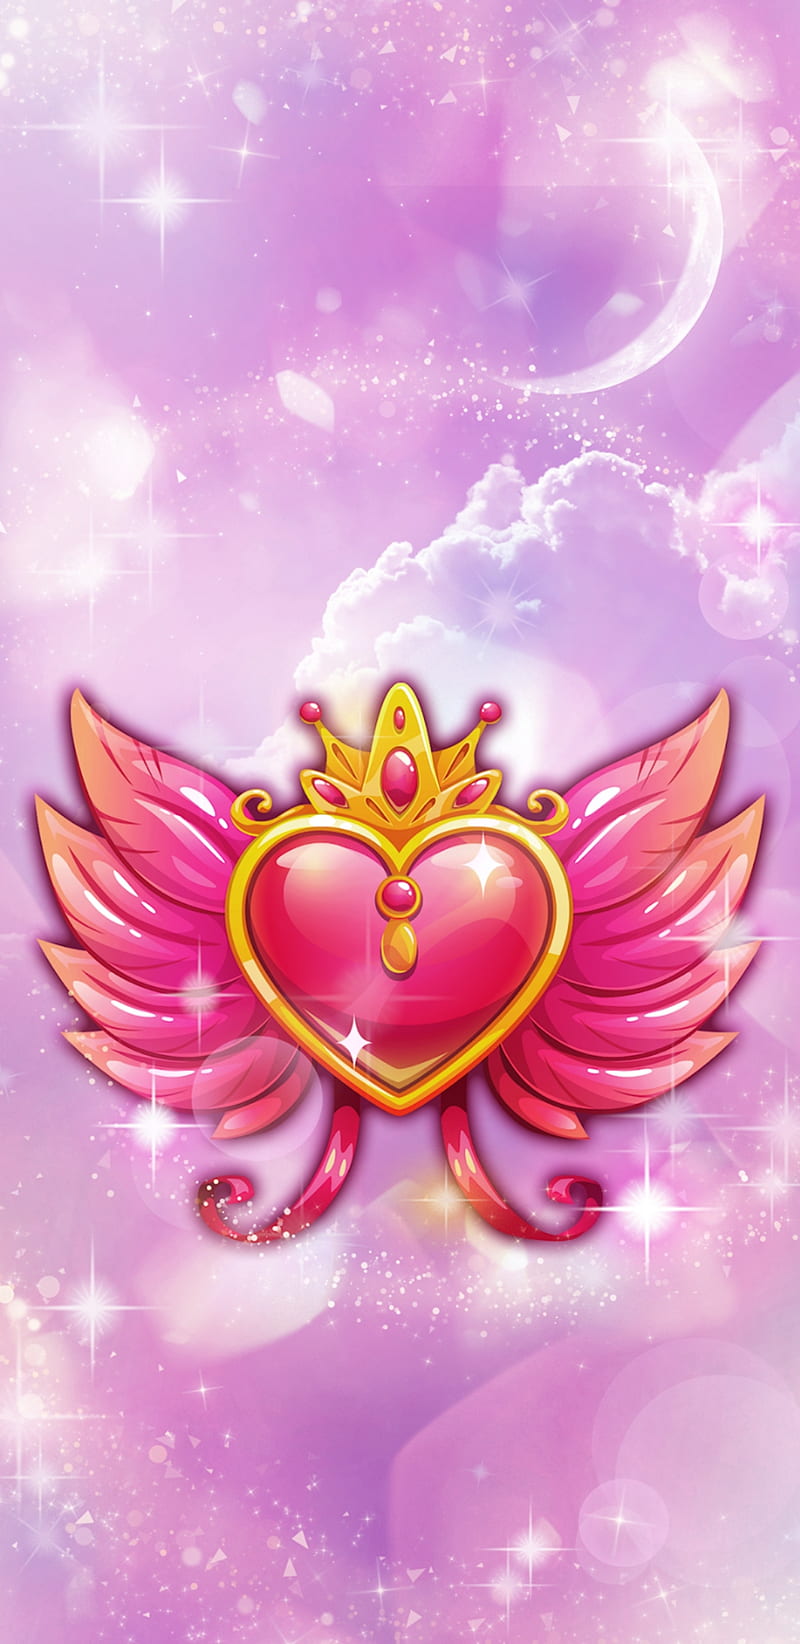 HeartOfLove, heart, love, pink, wings, clouds, fantasy, bonito, pretty, girly, HD phone wallpaper